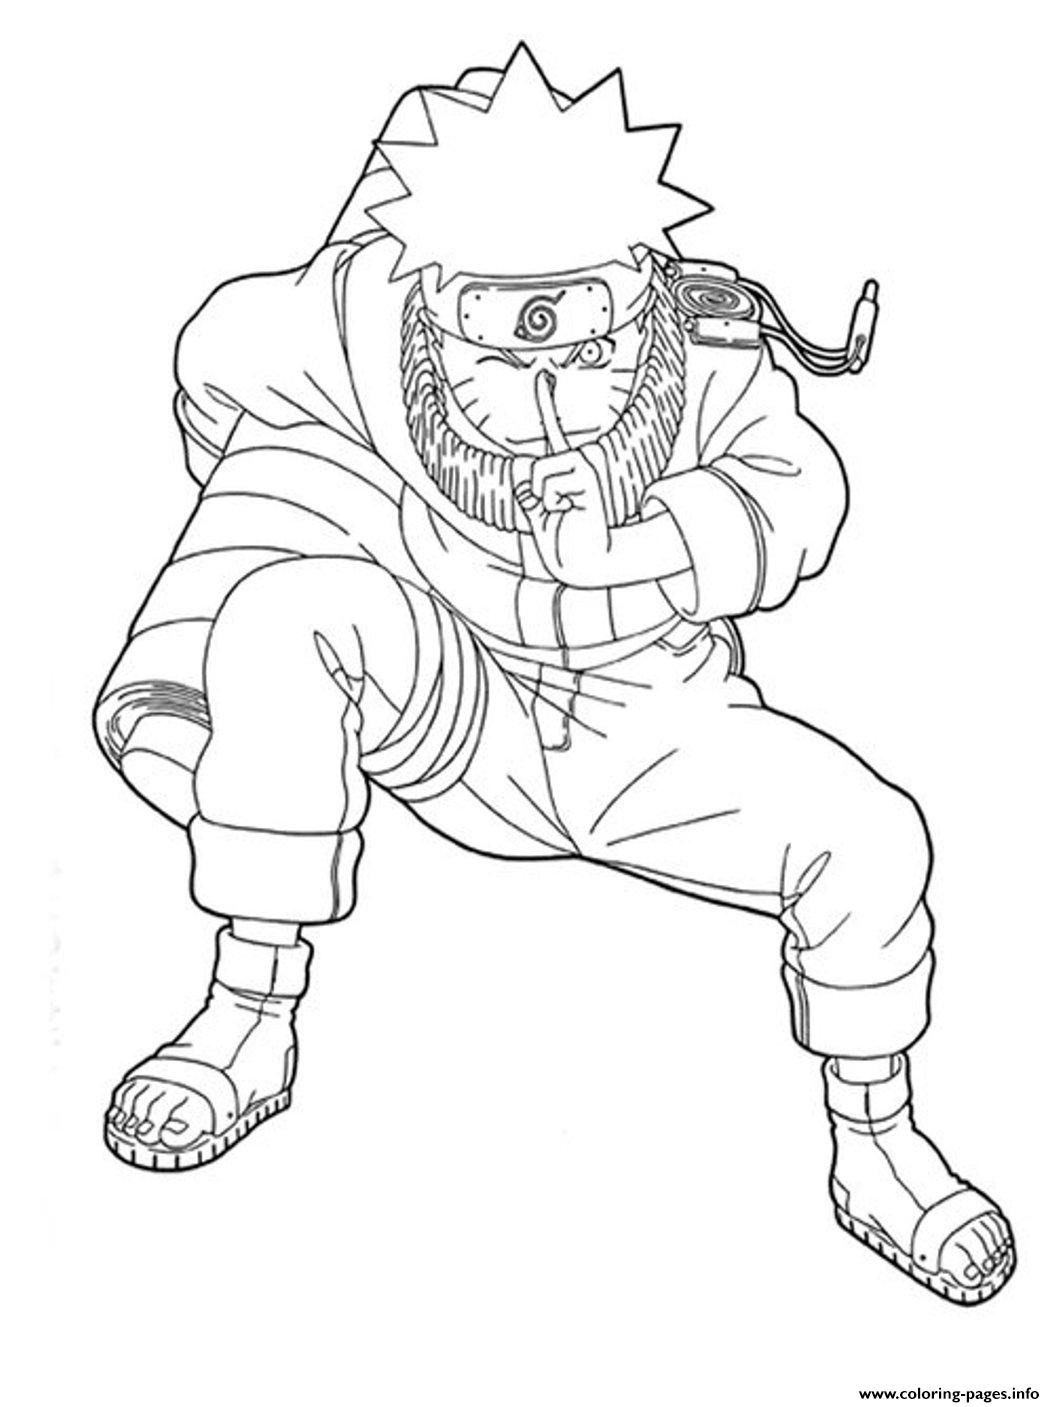 Naruto S Printable9961 coloring